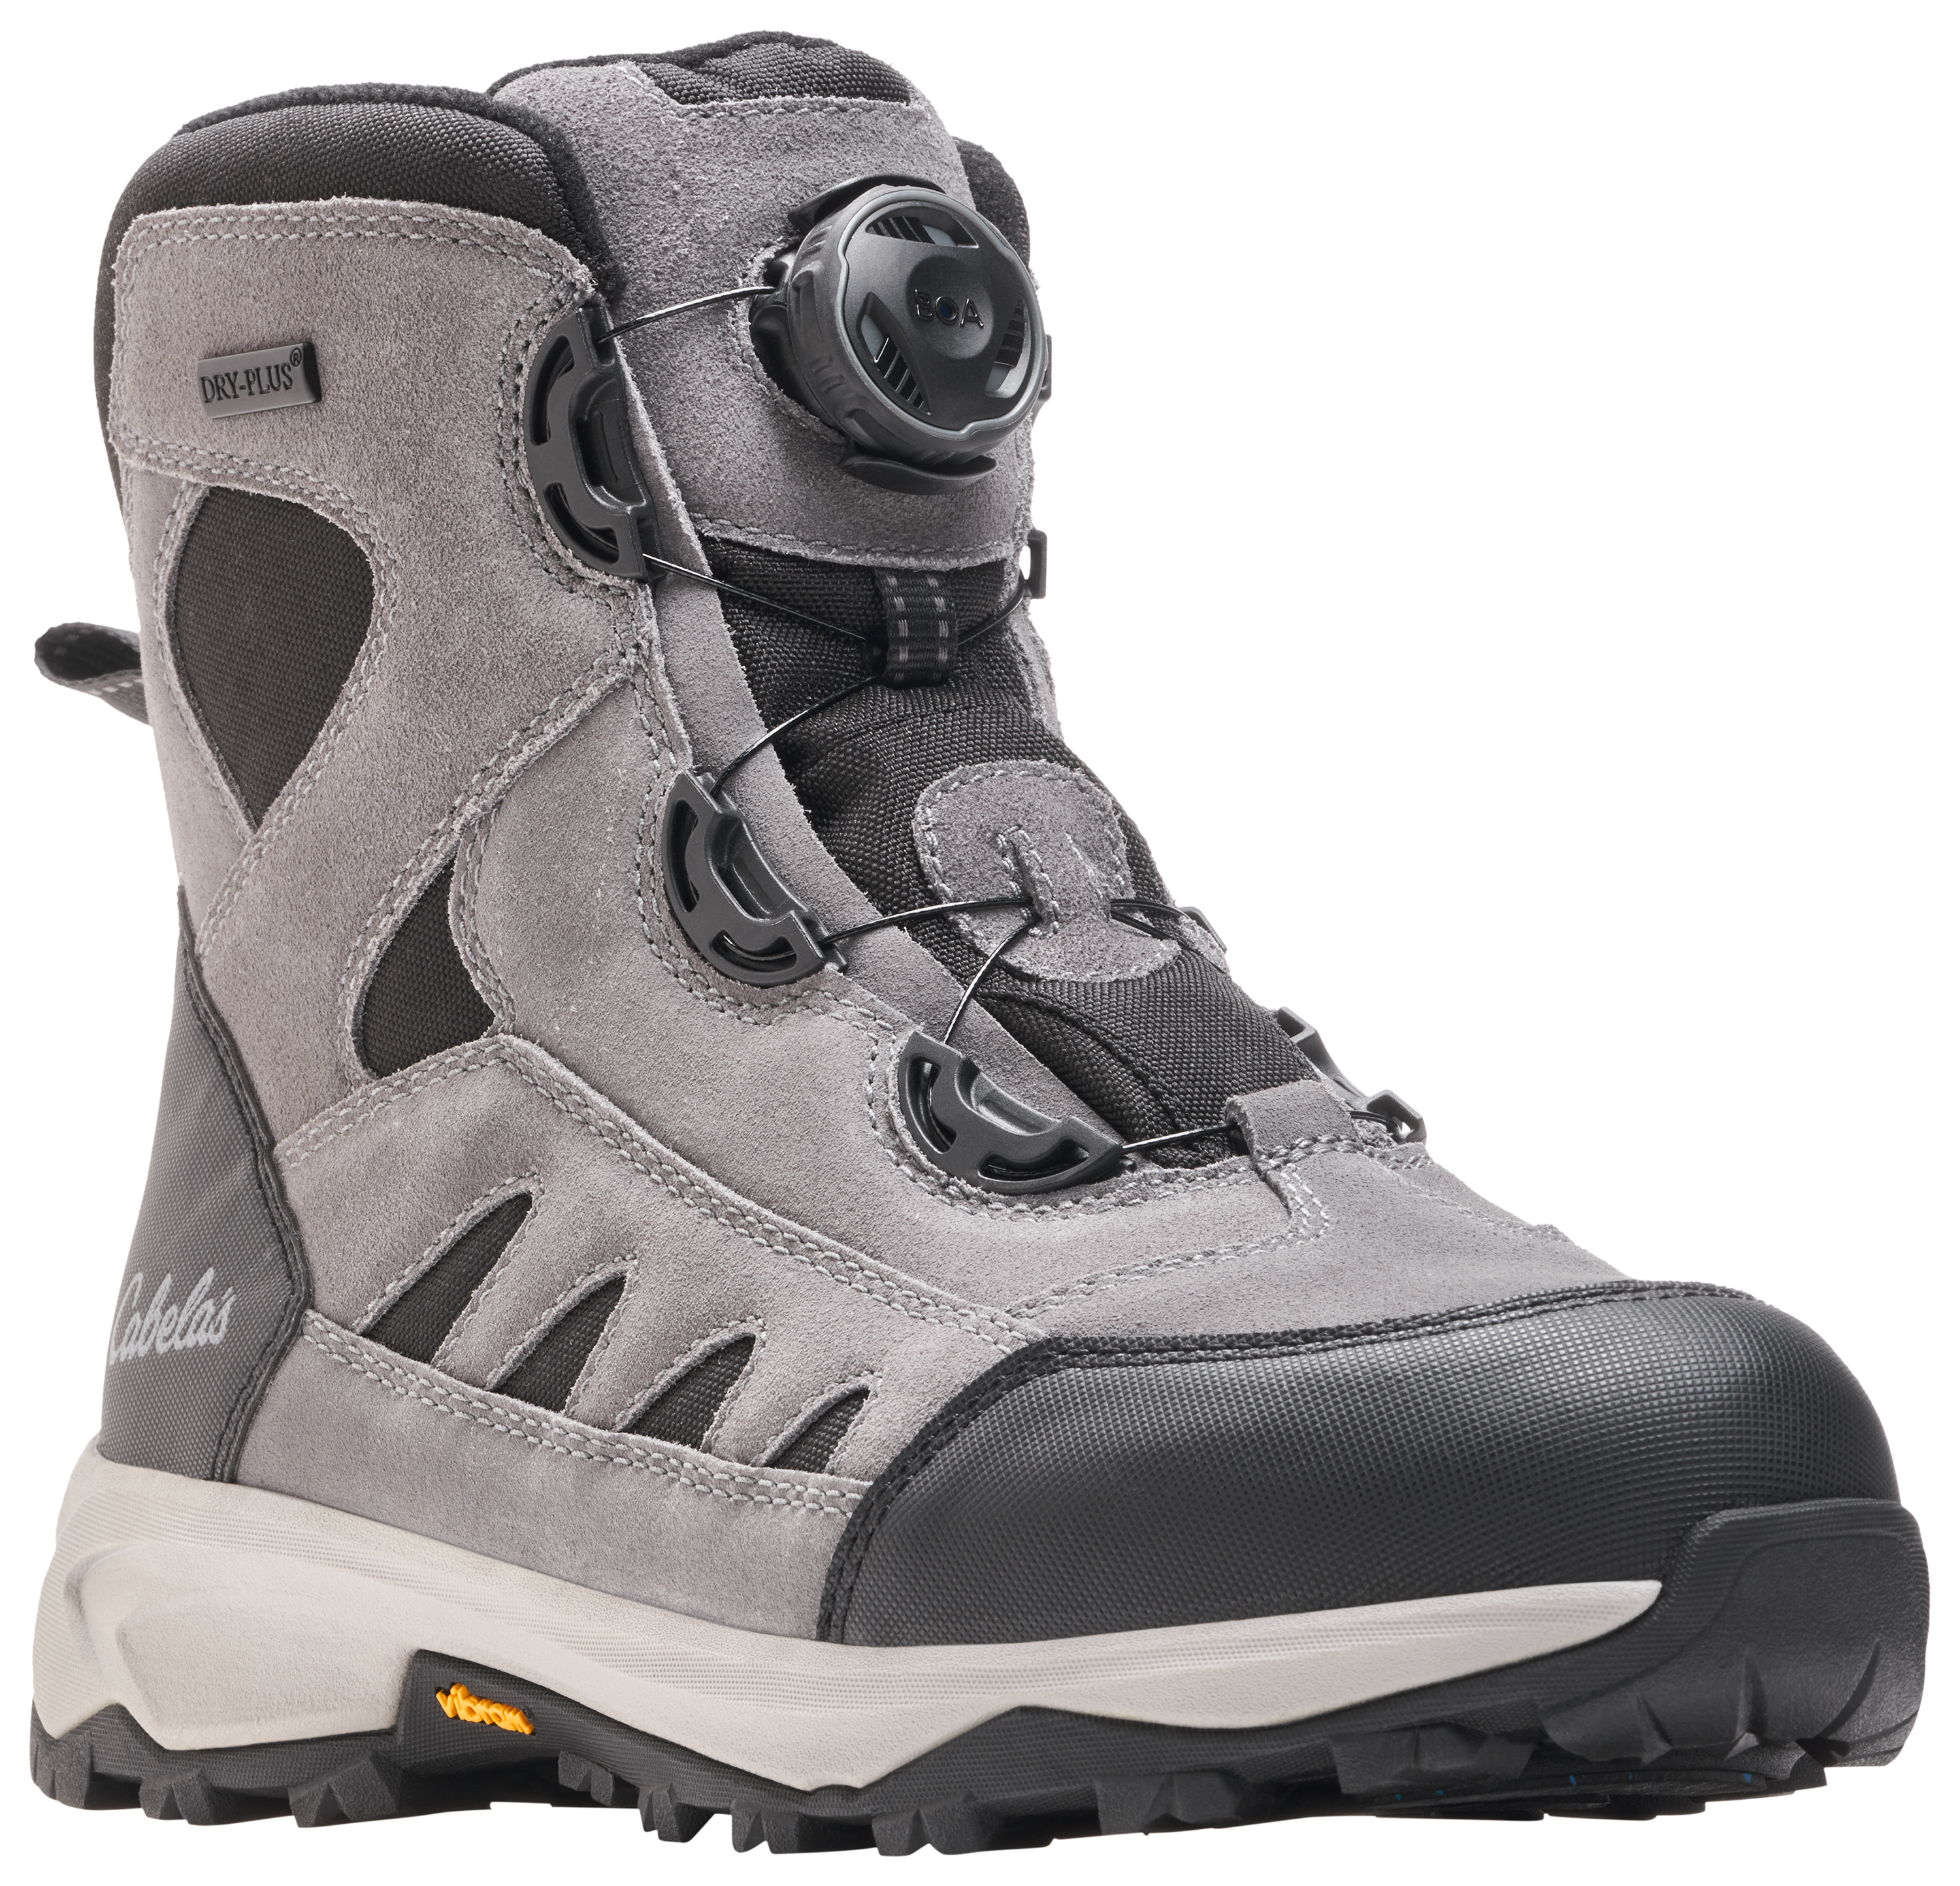 Cabela's Snow Runner Max 2.0 BOA Insulated Waterproof Winter Boots for Men - Granite Gray - 8M